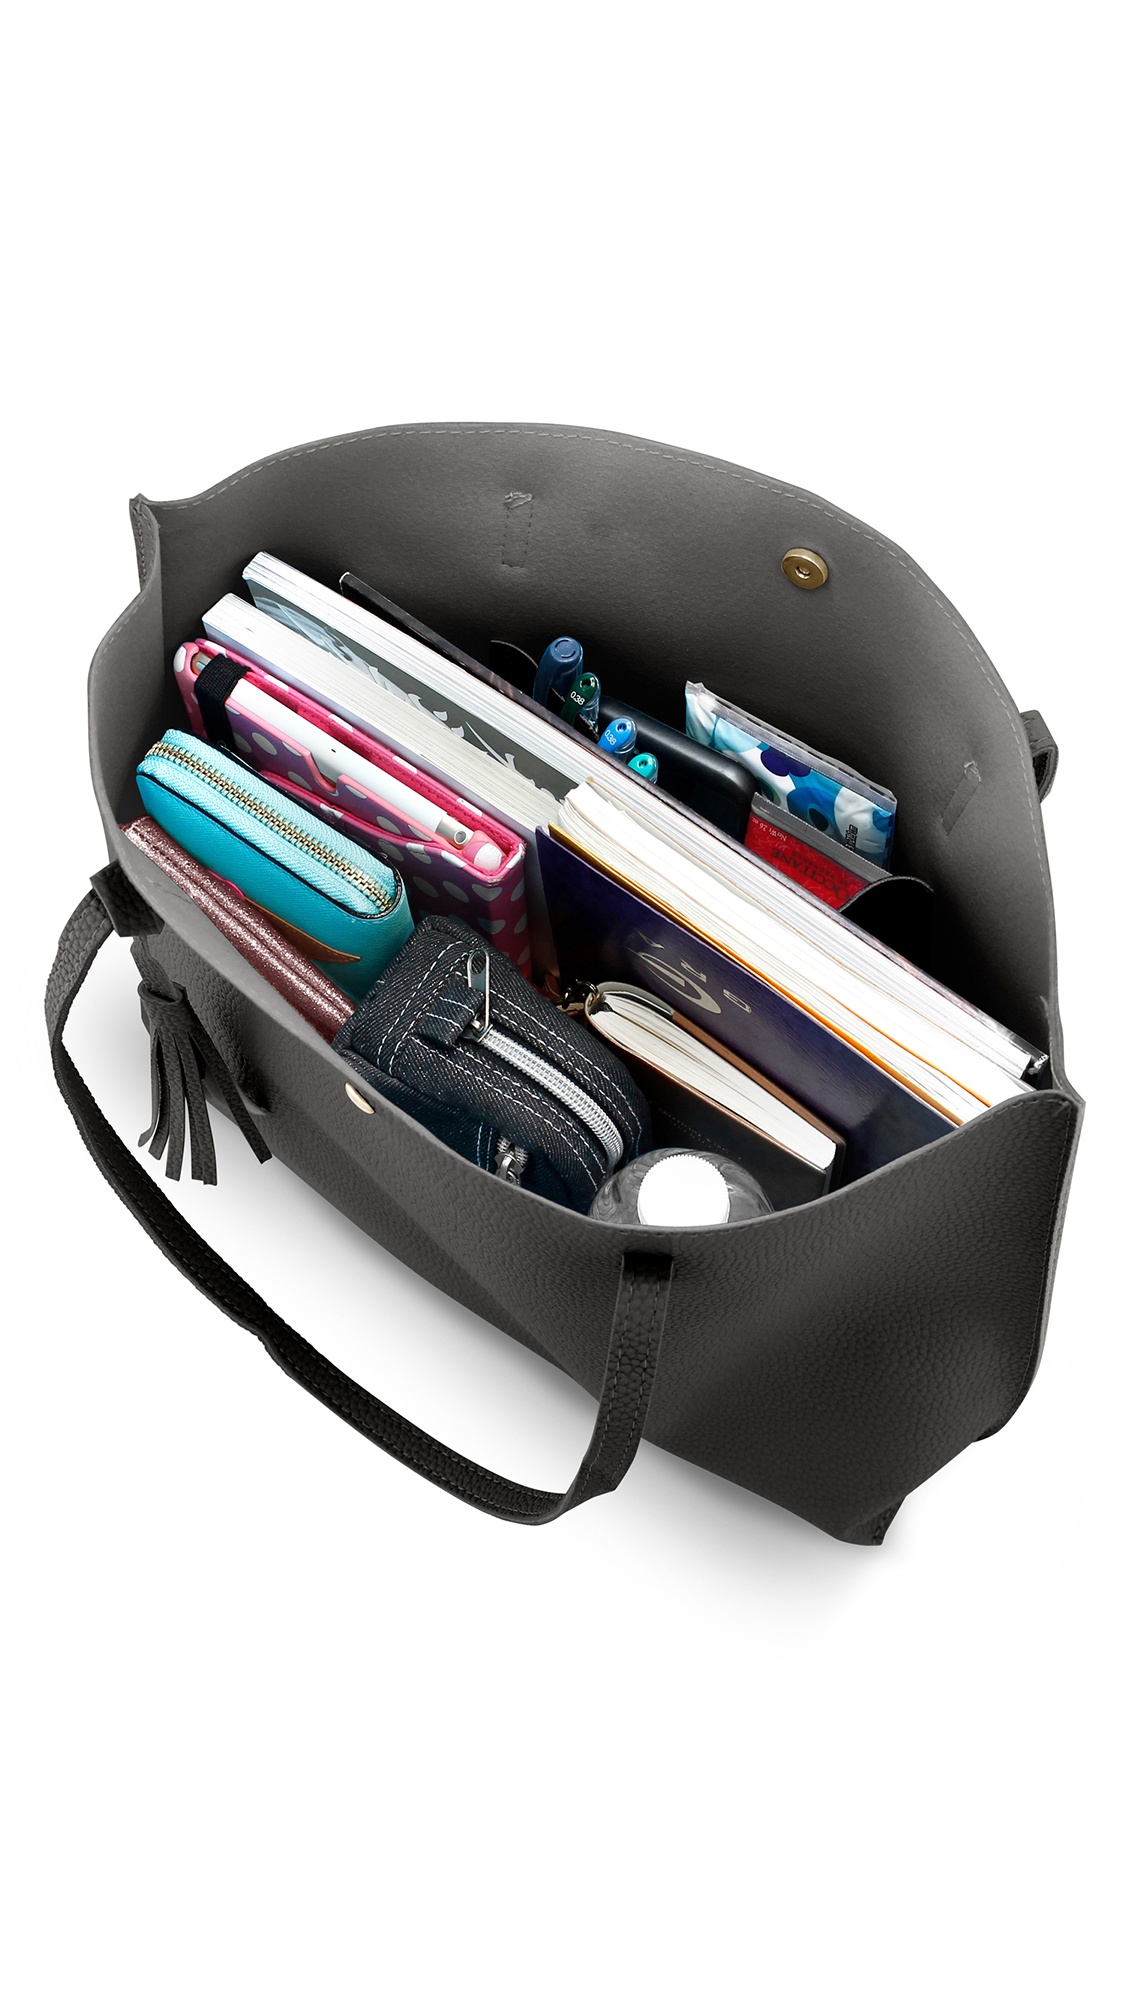 Women PU Leather Tote Bag Tassels Leather Shoulder Handbags Fashion Ladies Purses Satchel Messenger Bags - Dark Gray - image 4 of 4